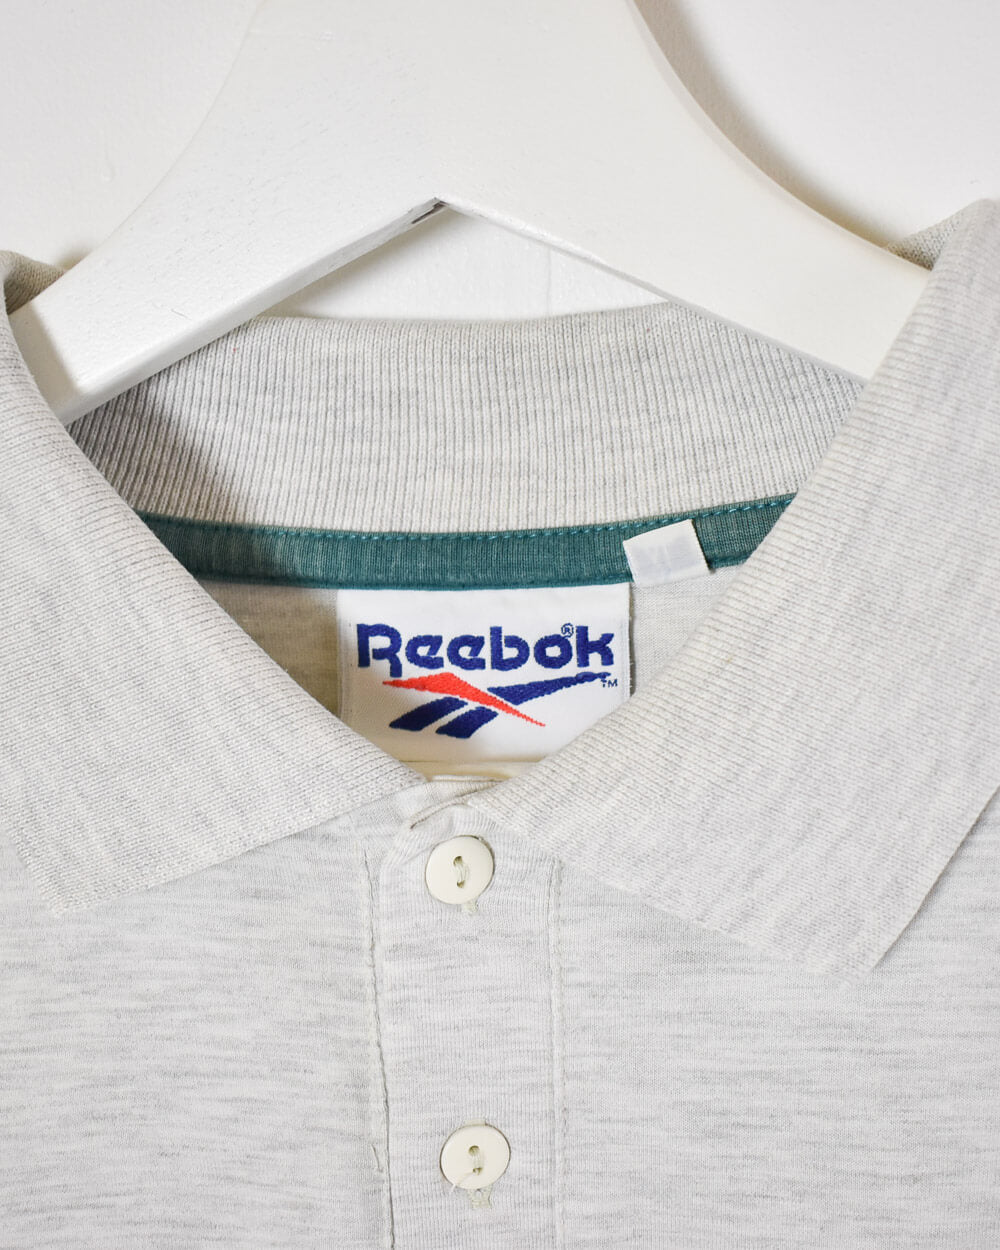 Stone Reebok Polo Shirt - Large